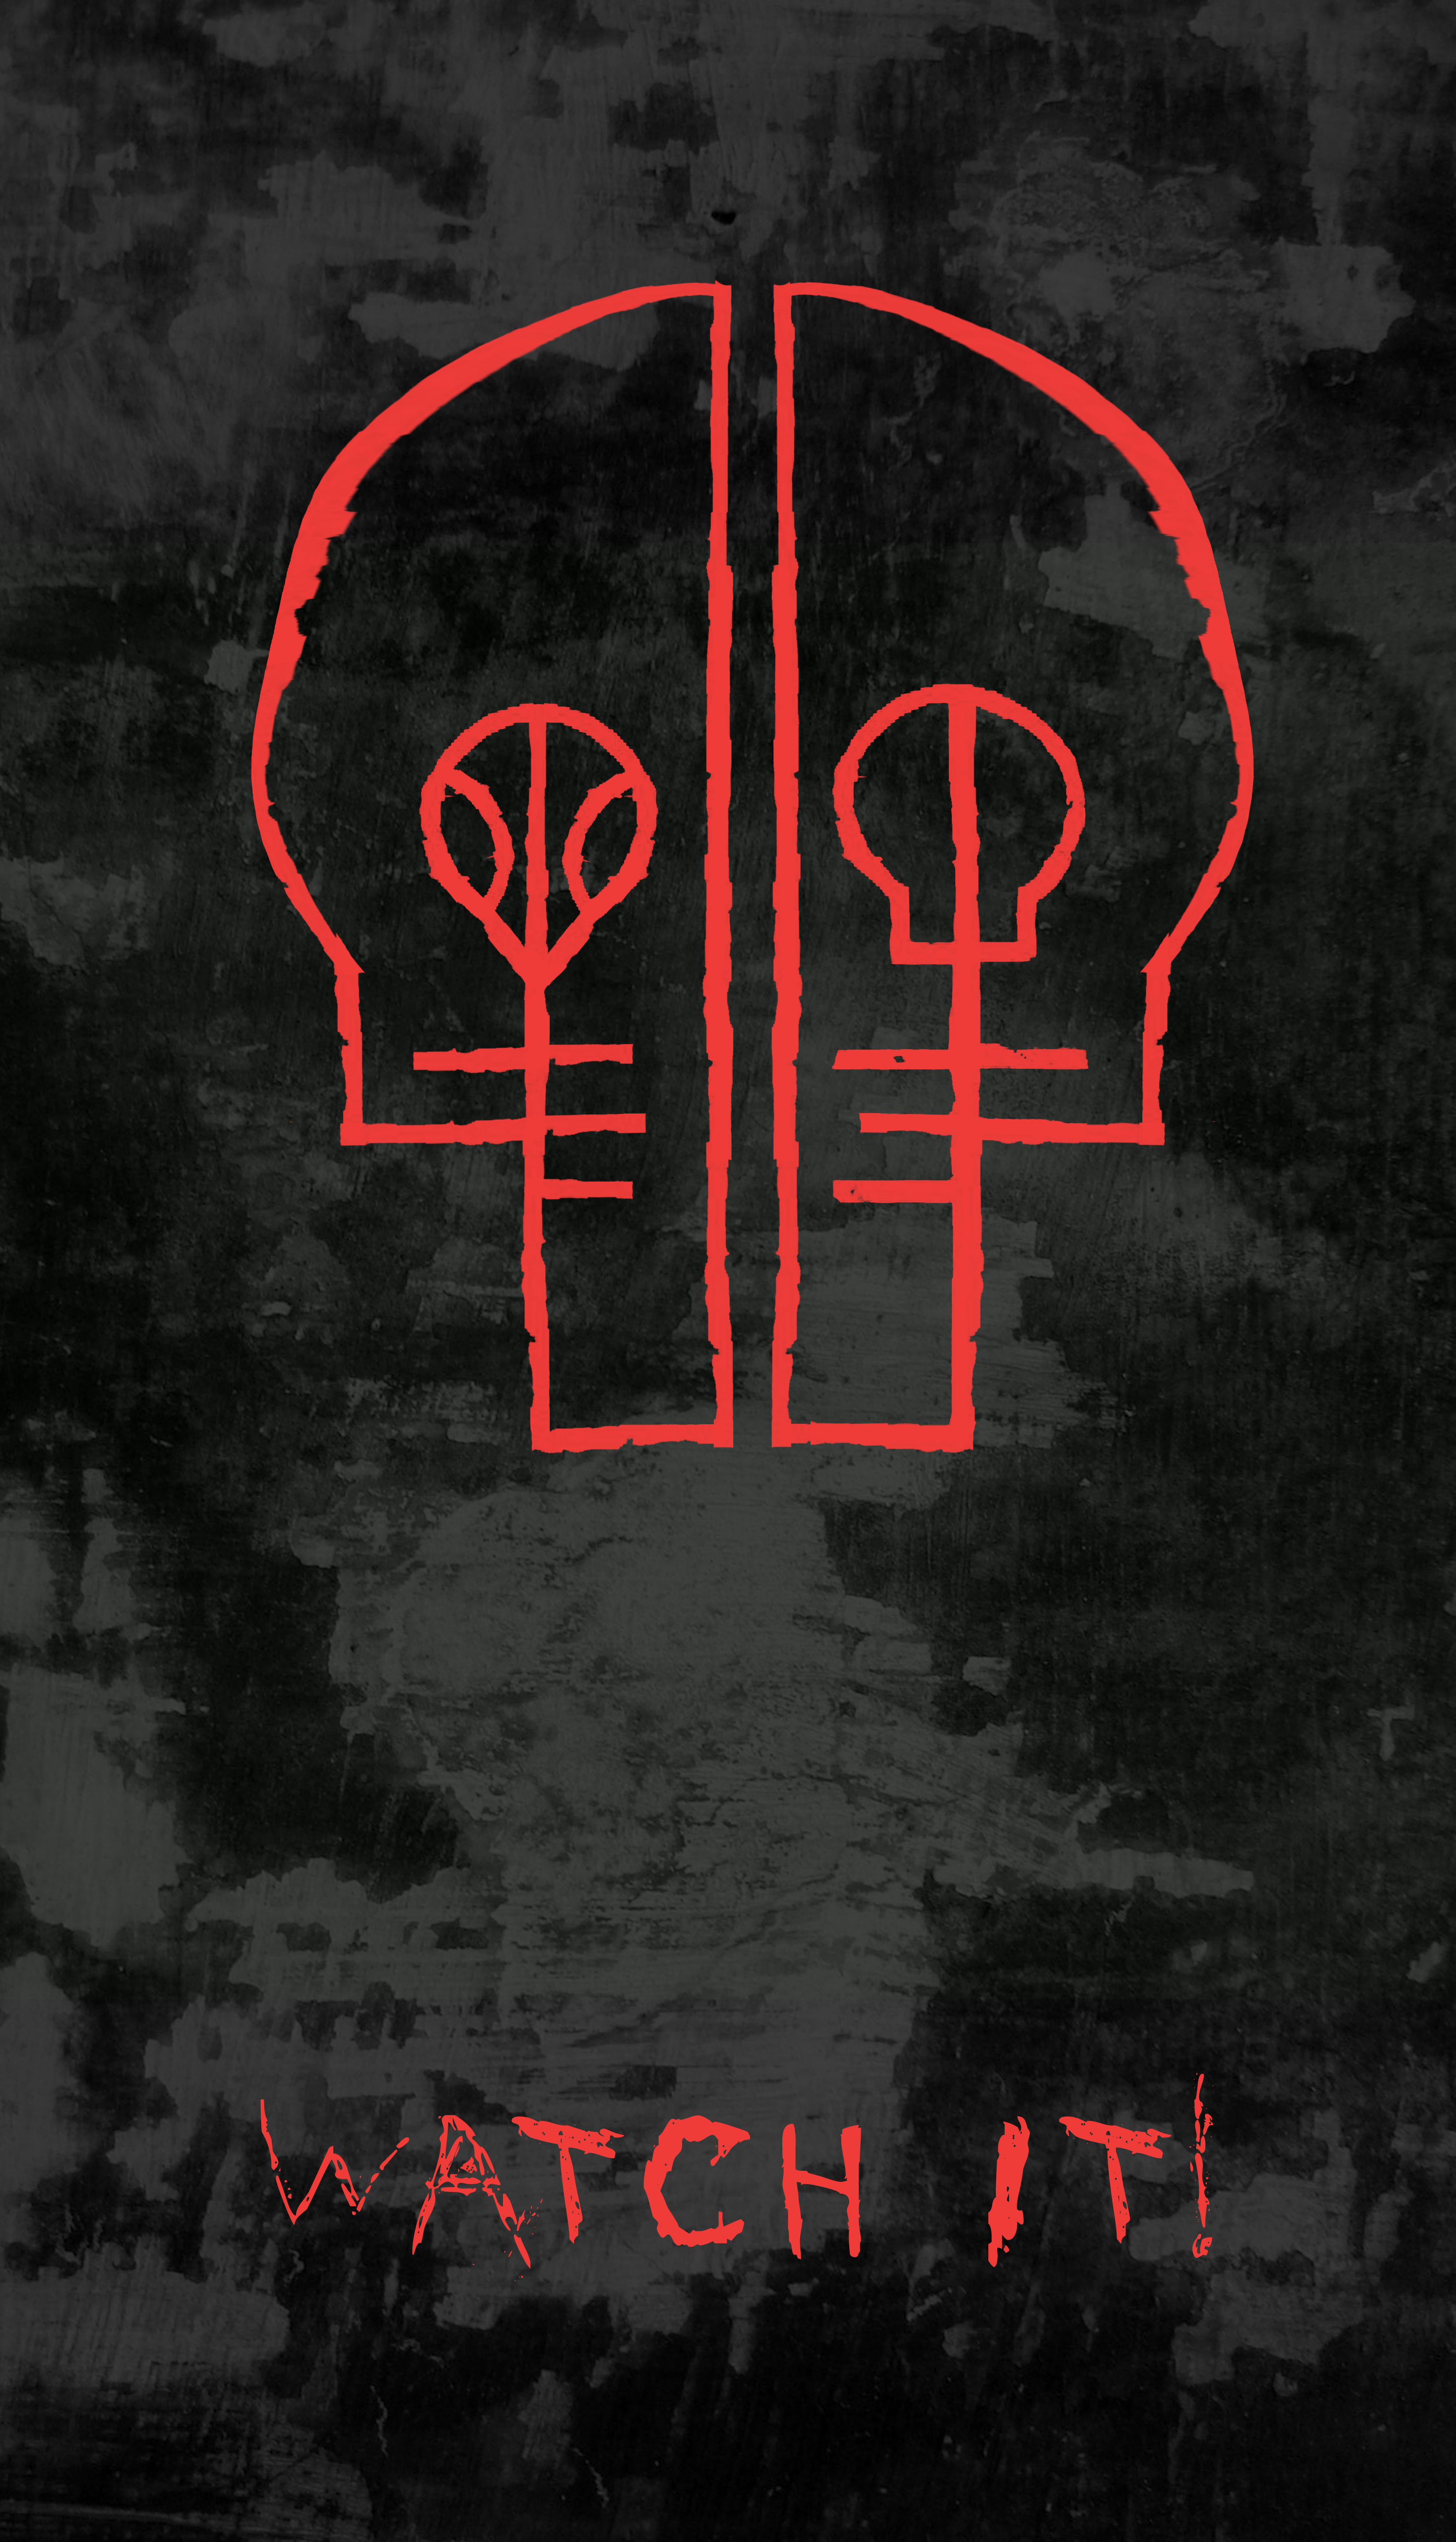 Free download Twenty One Pilots Android Wallpaper wwwpixsharkcom